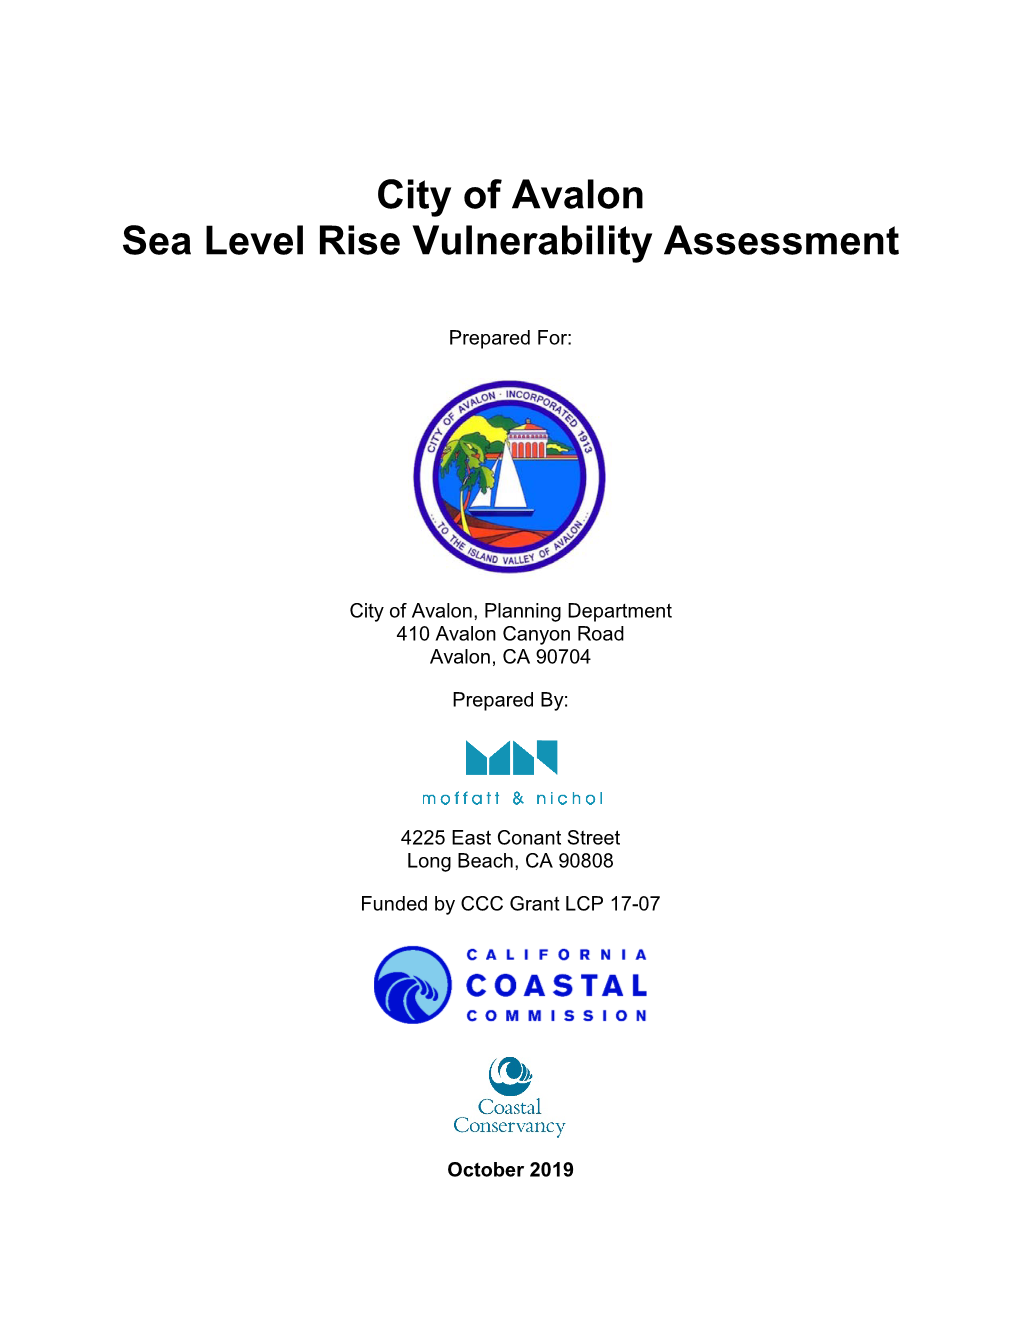 City of Avalon Sea Level Rise Vulnerability Assessment